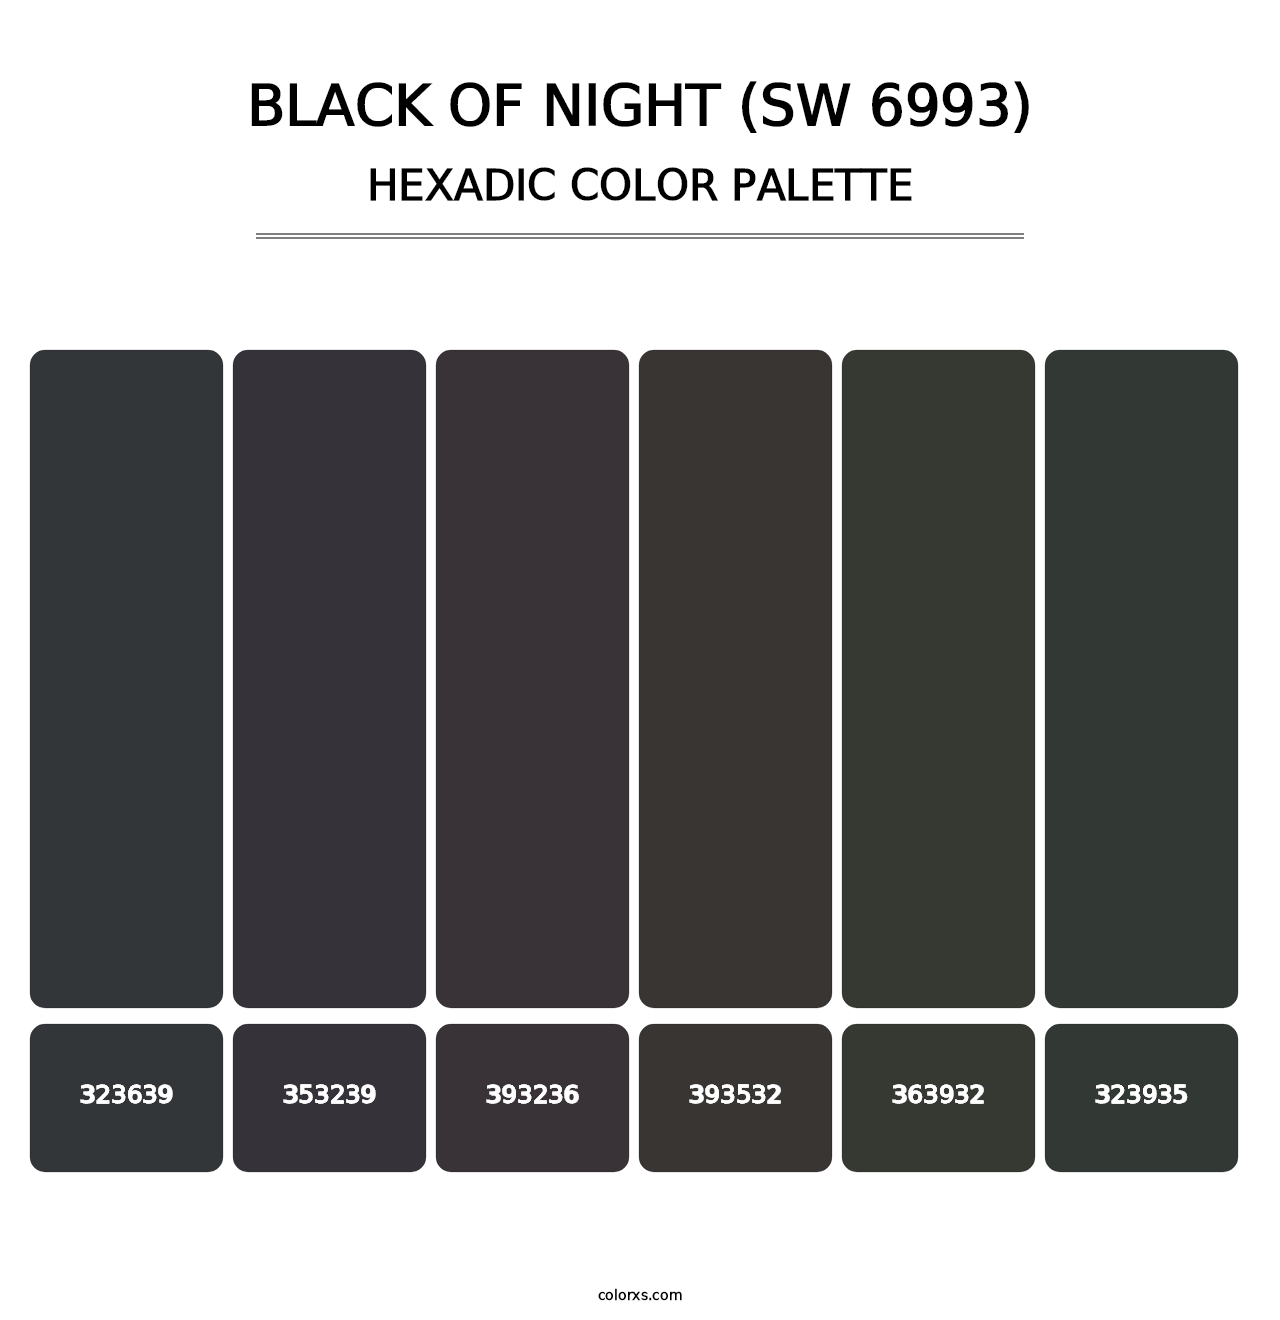 Black of Night (SW 6993) - Hexadic Color Palette